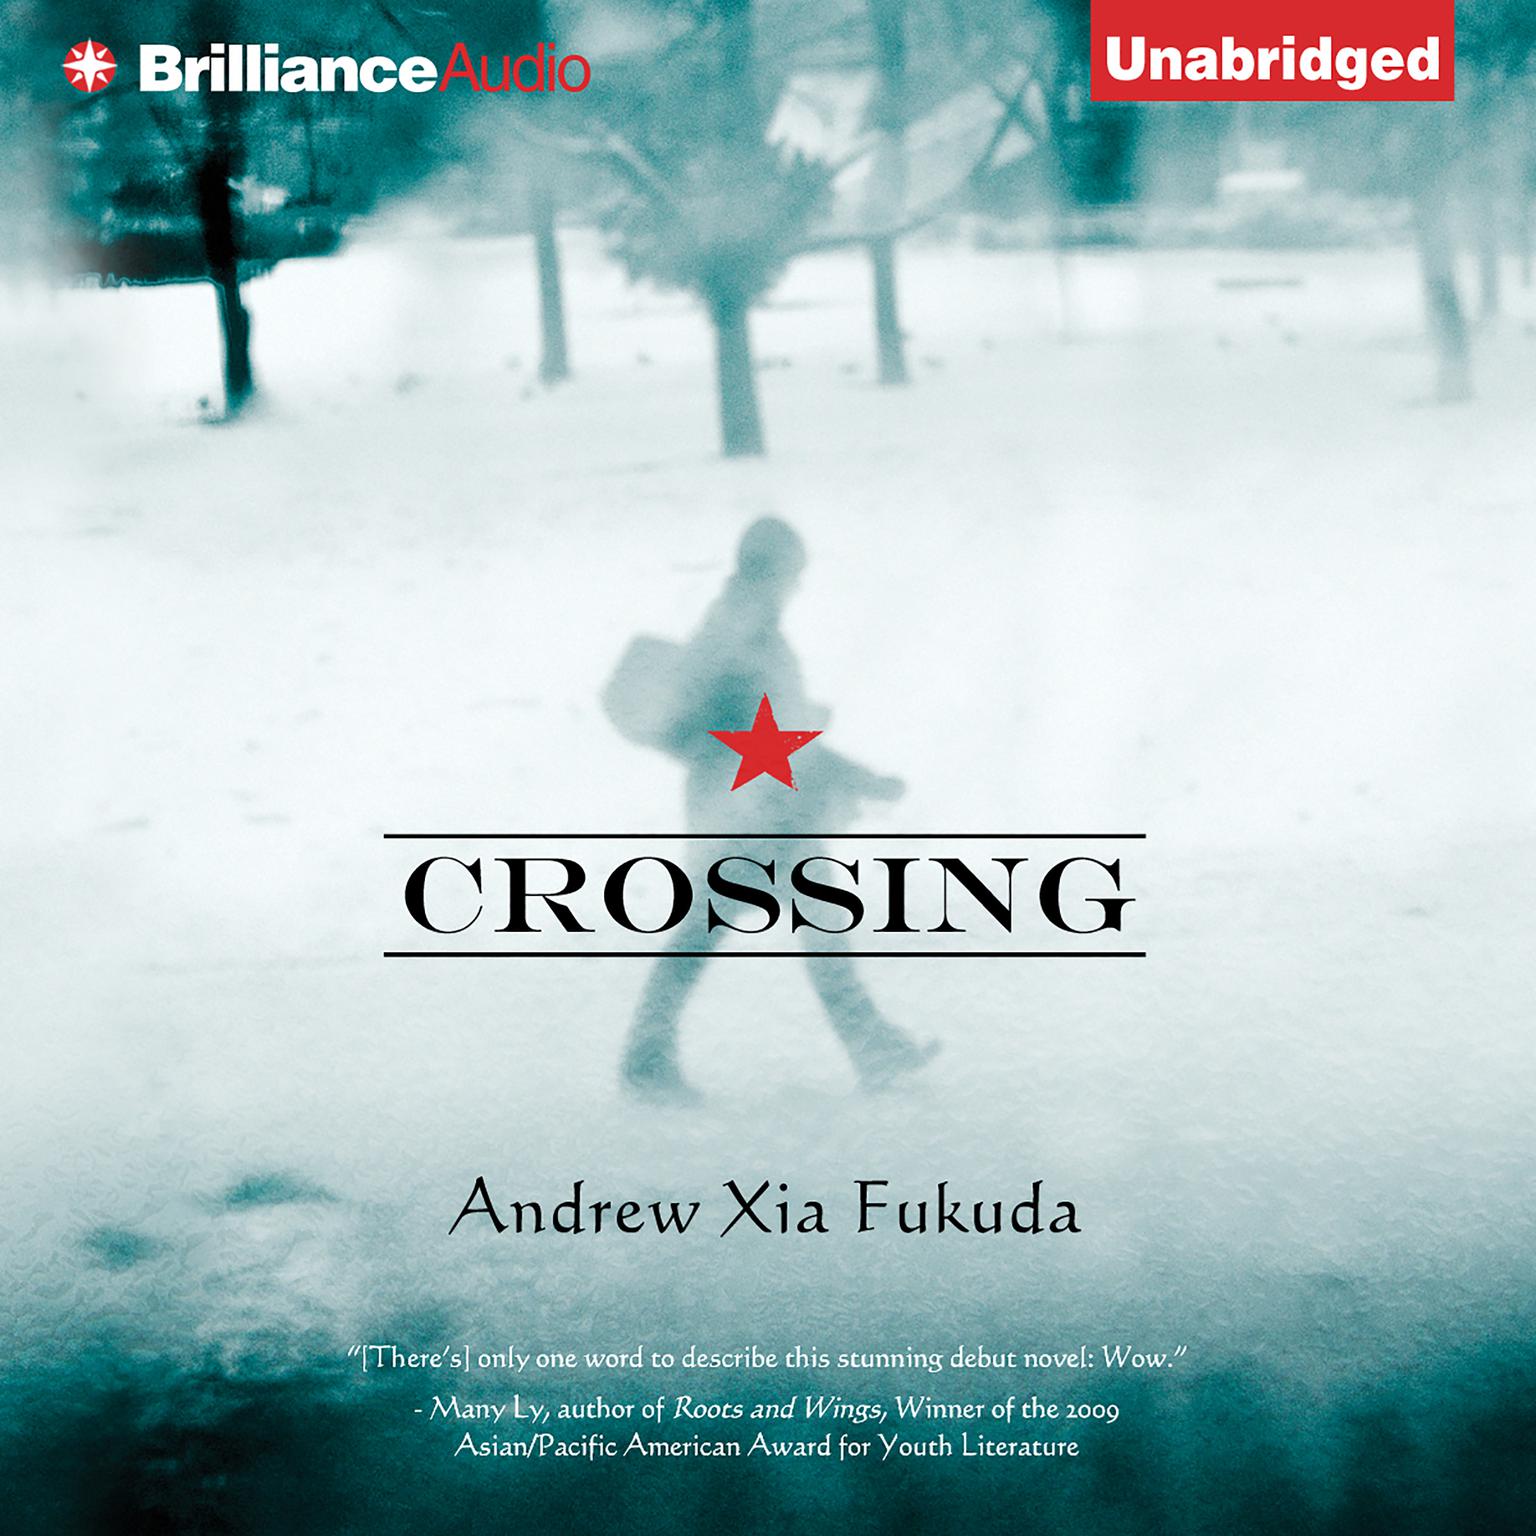 Crossing Audiobook, by Andrew Fukuda